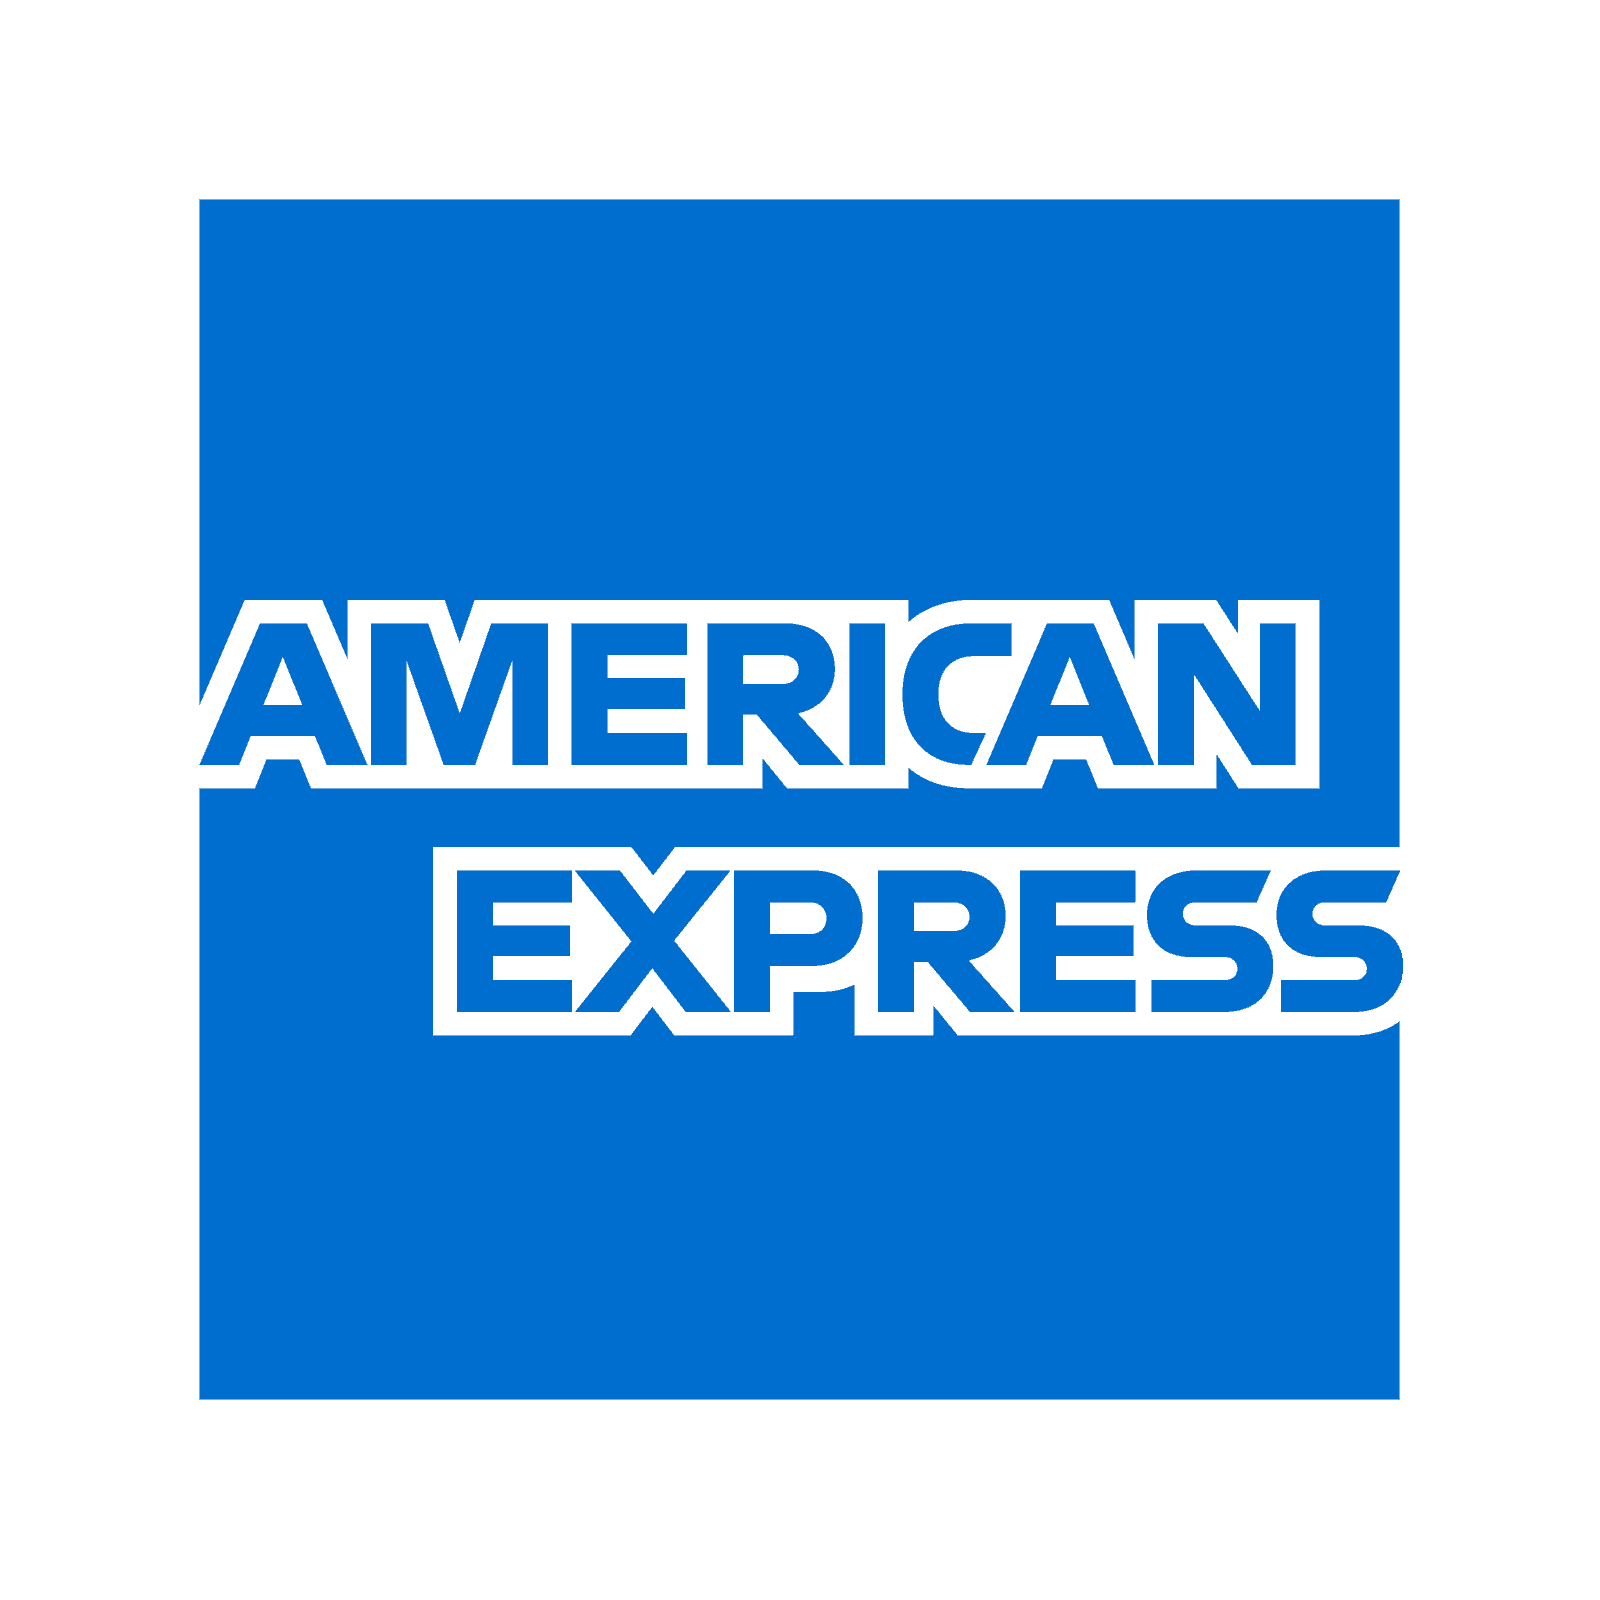 Winst American Express stijgt harder dan omzet